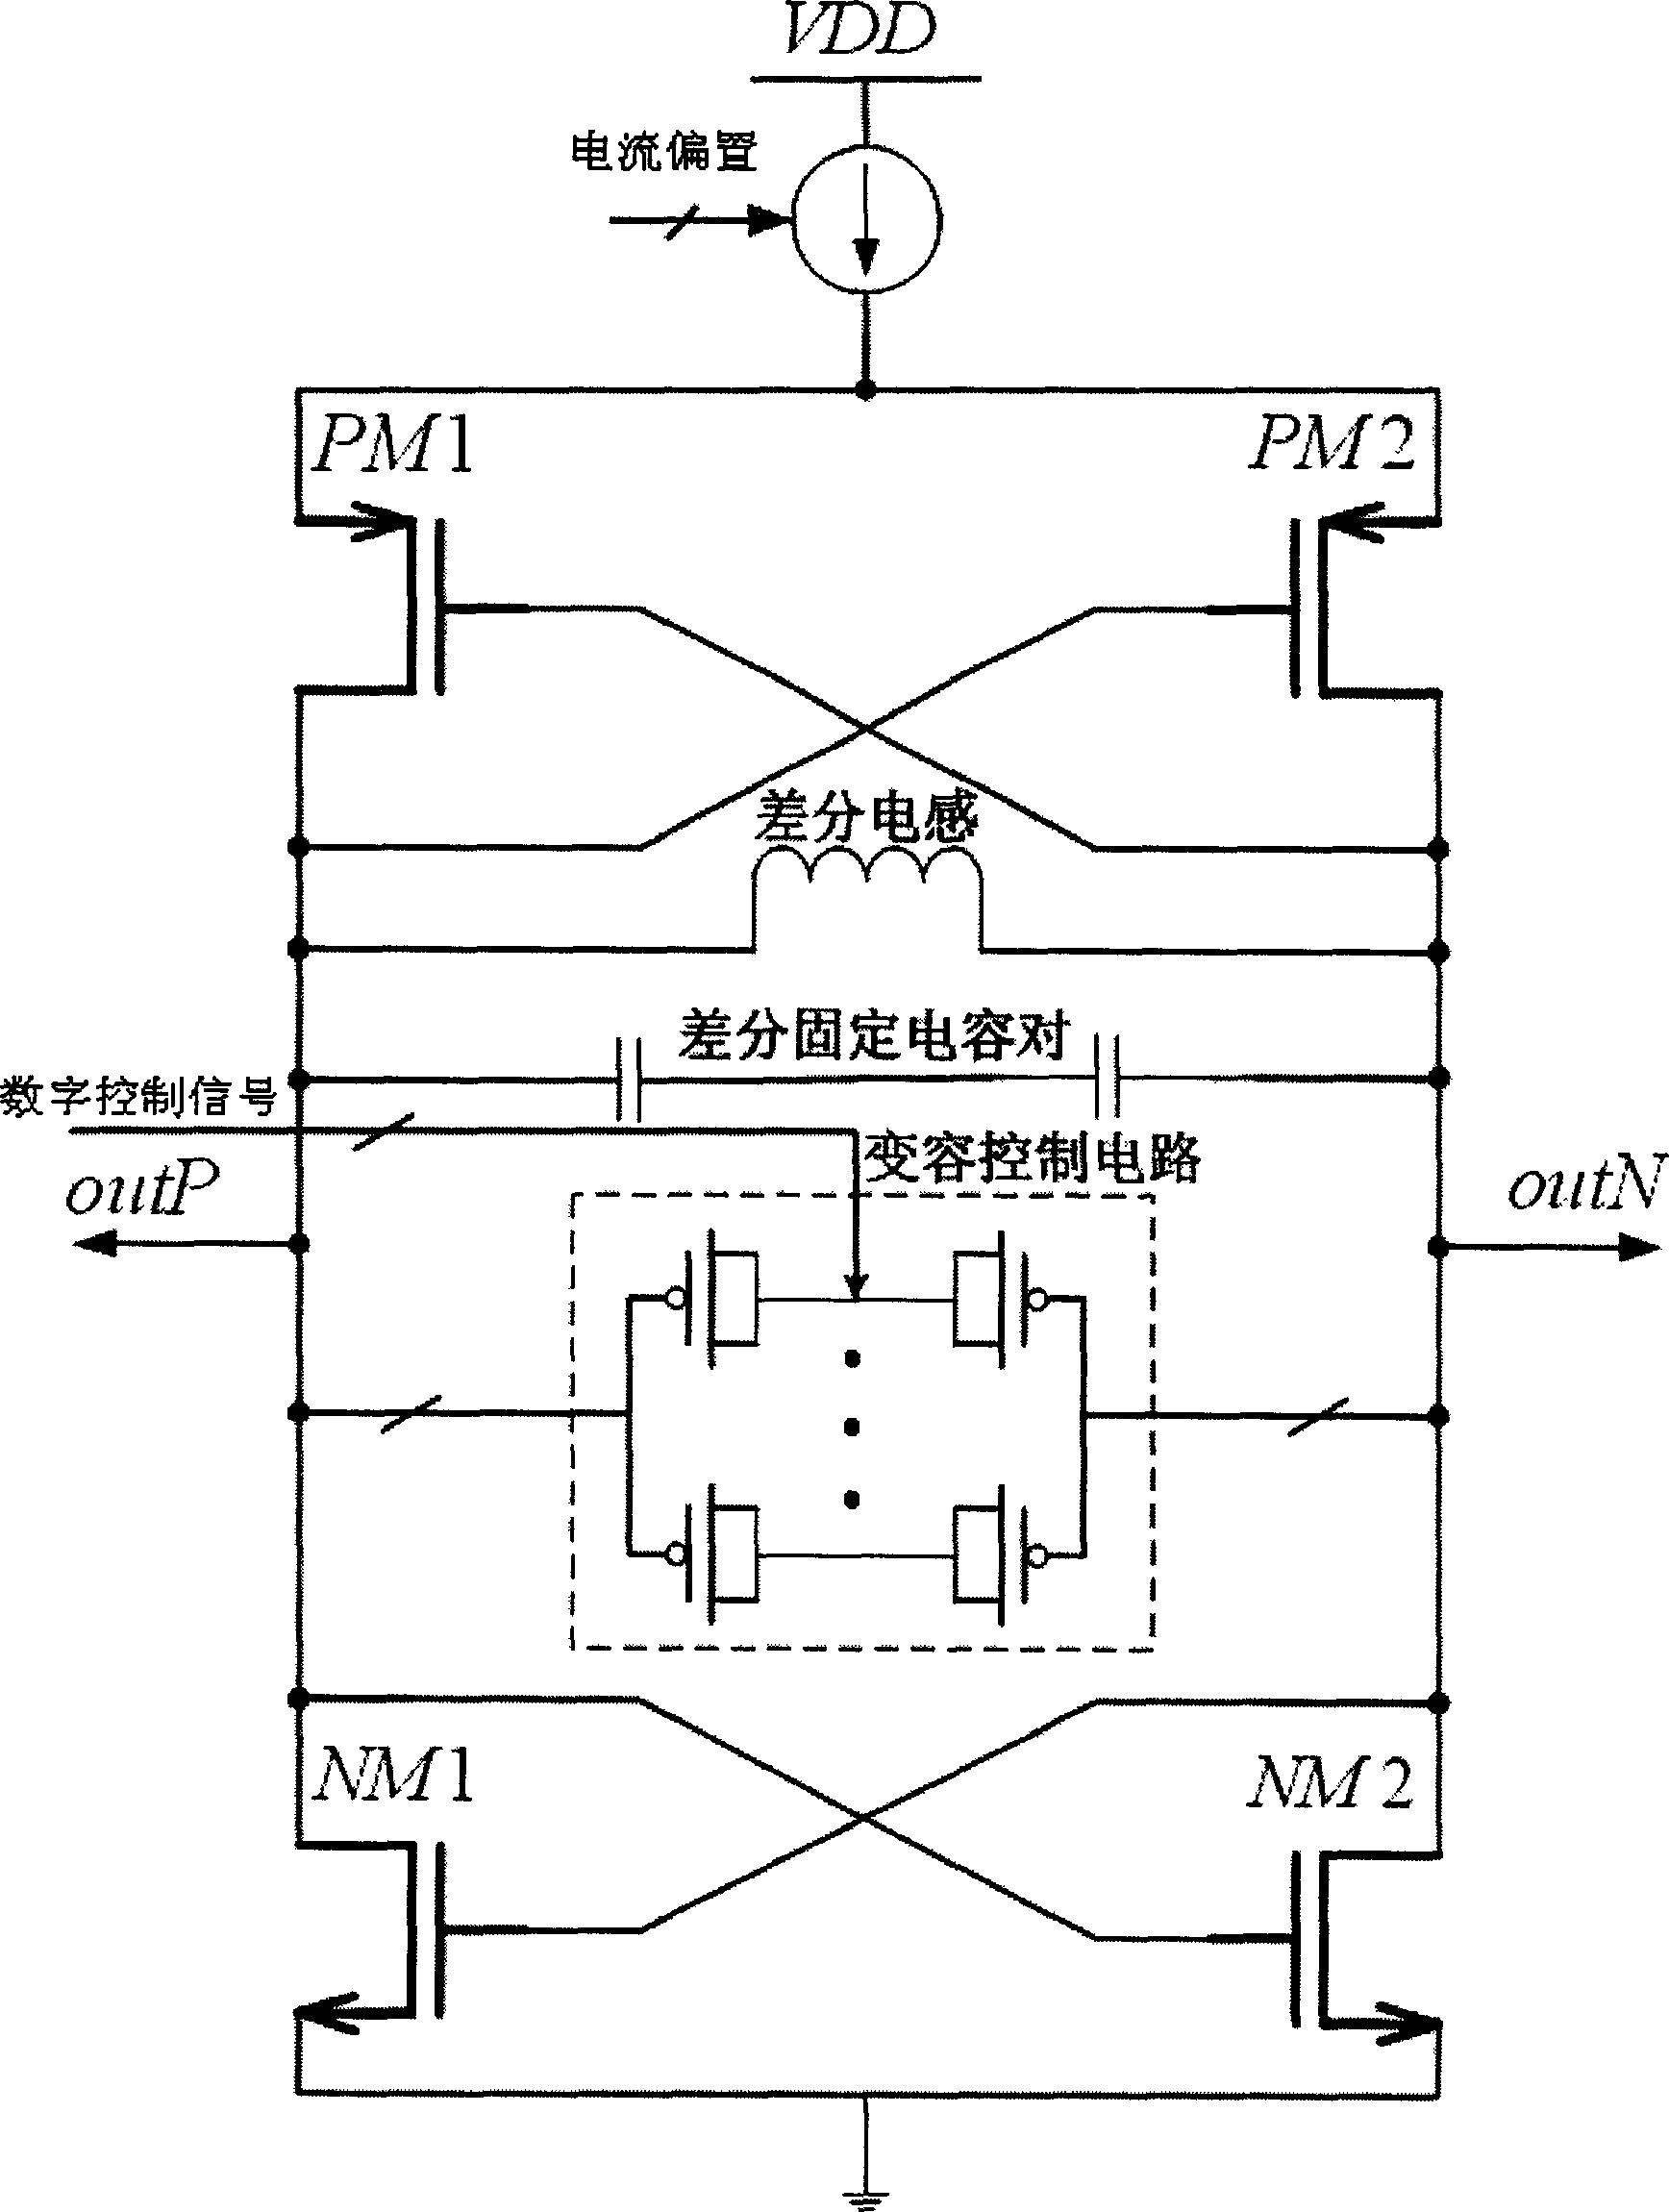 CMOS digital control LC oscillator on chip